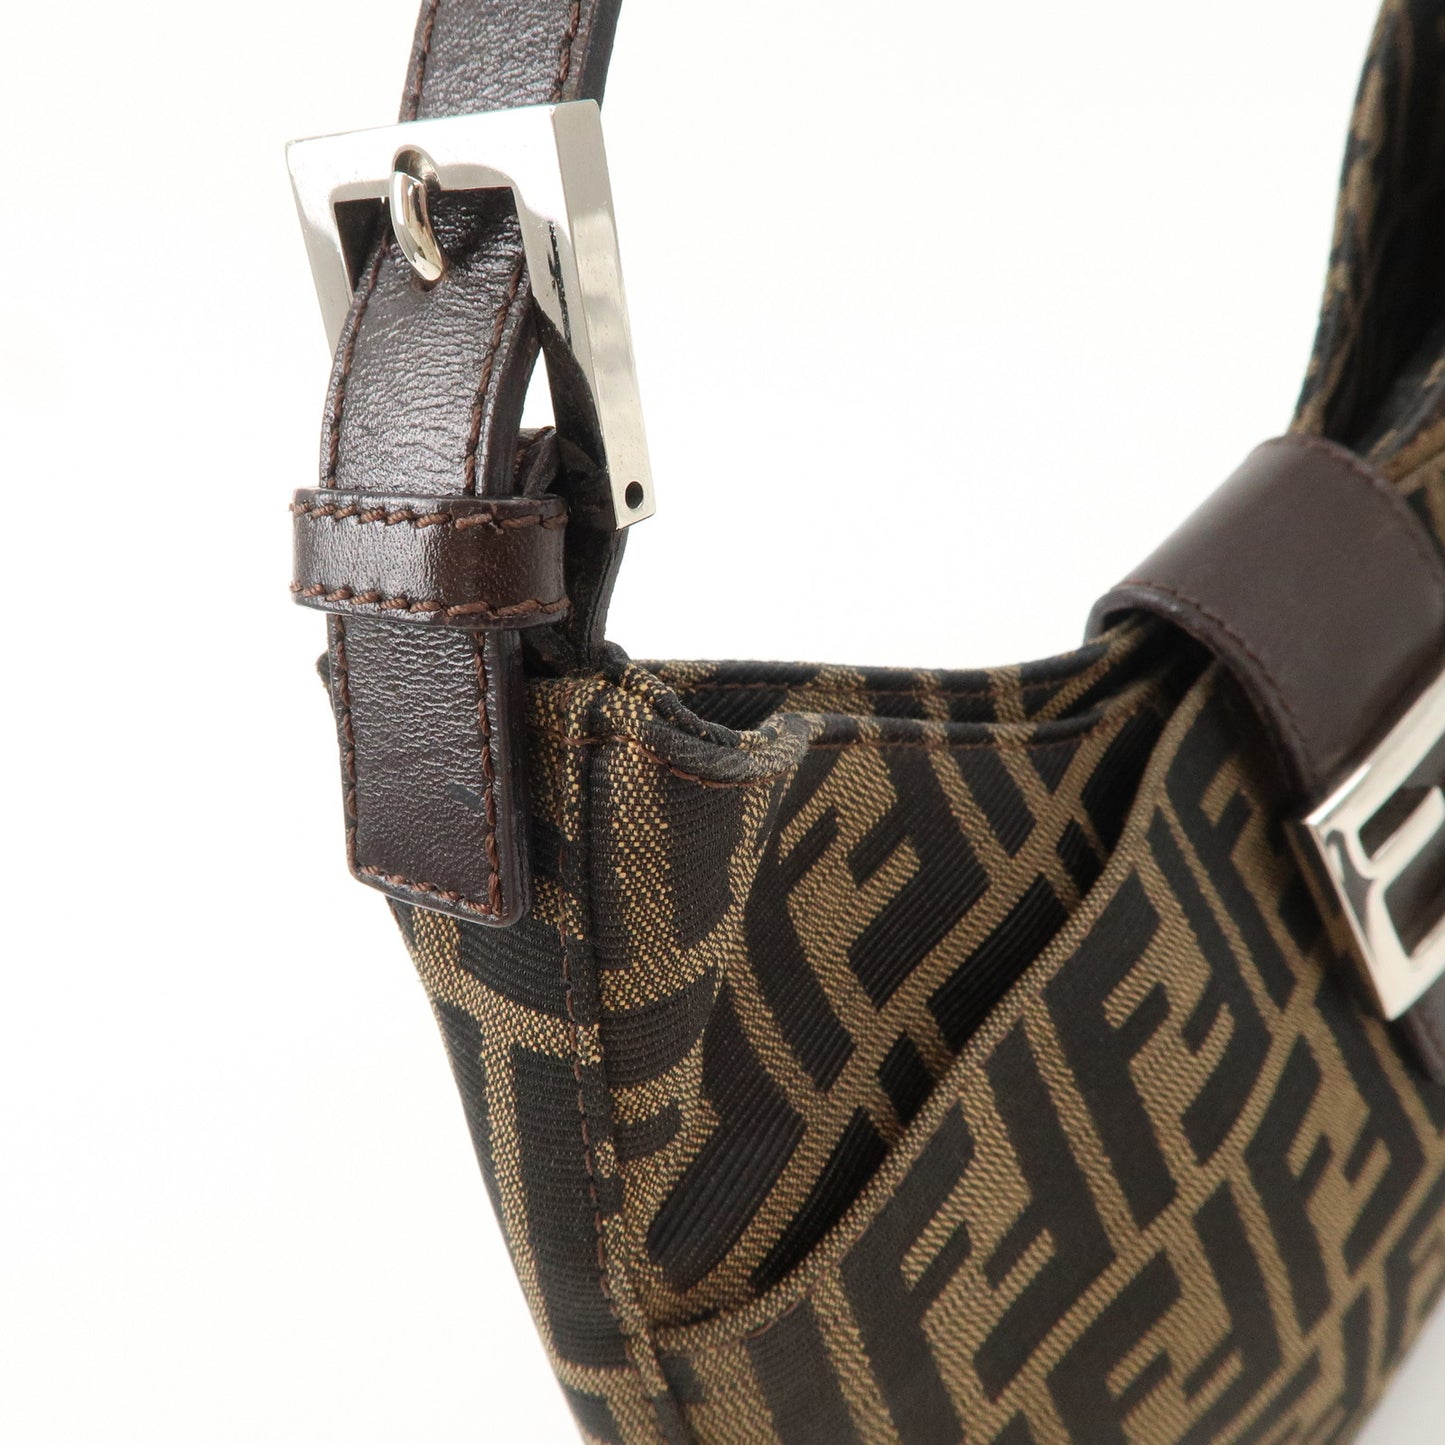 AuthenticFENDI Zucca Canvas Leather Shoulder Bag Brown Black 26569